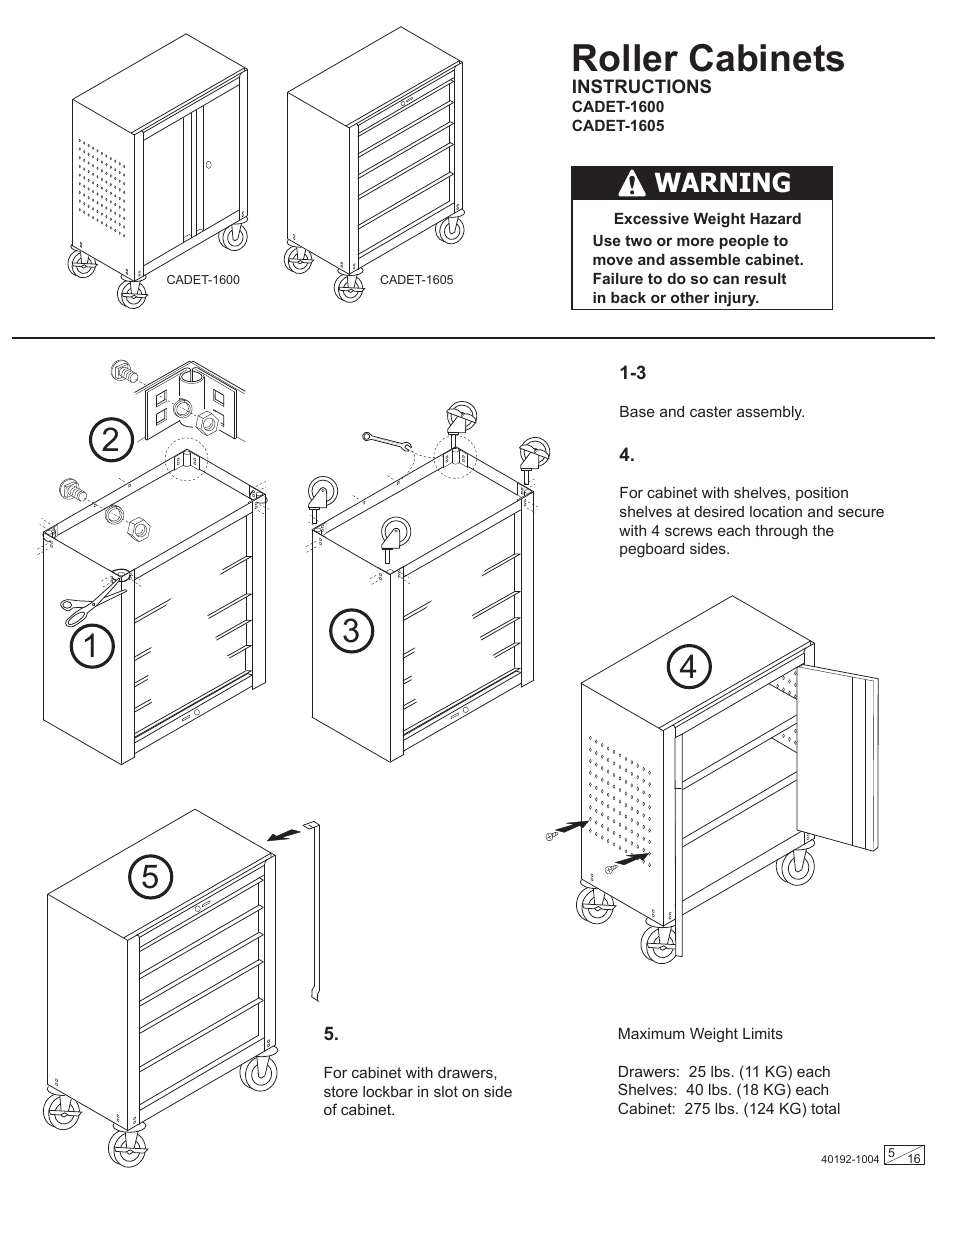 Roller Cabinets Warning Stack On Gladiator Cade User Manual